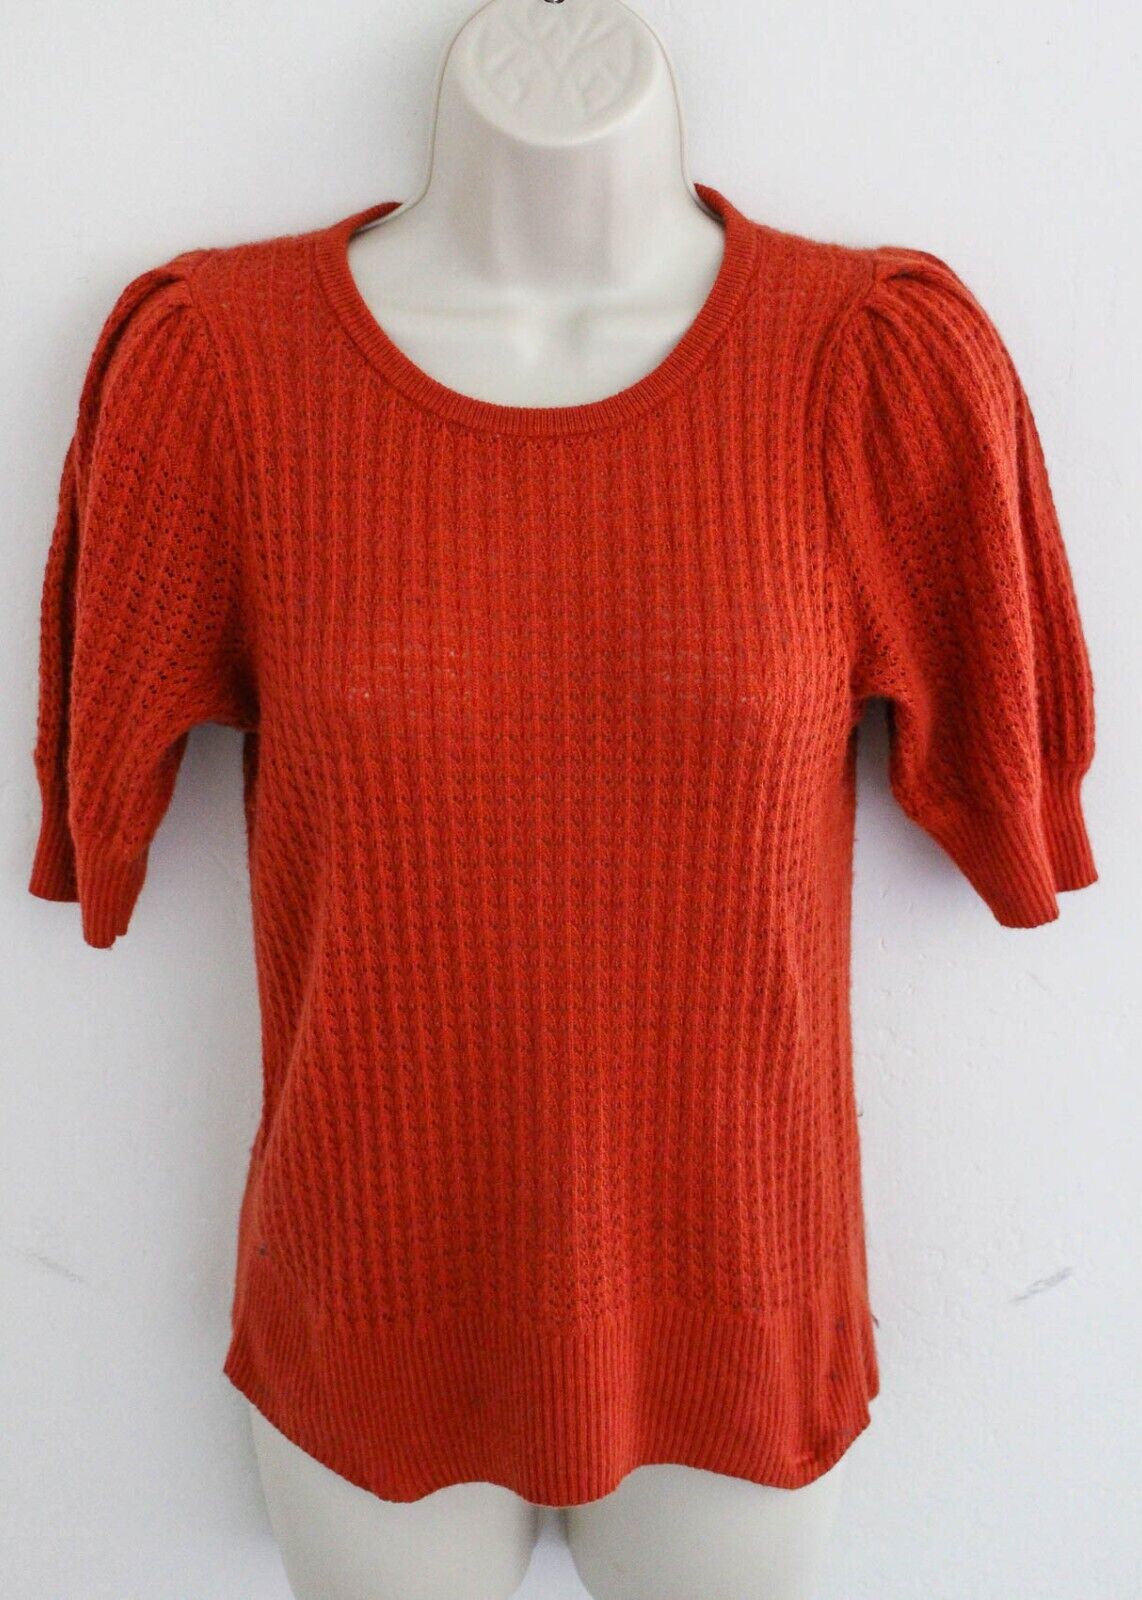 Madewell Small Sweater Orange Pullover Puff Short… - image 1